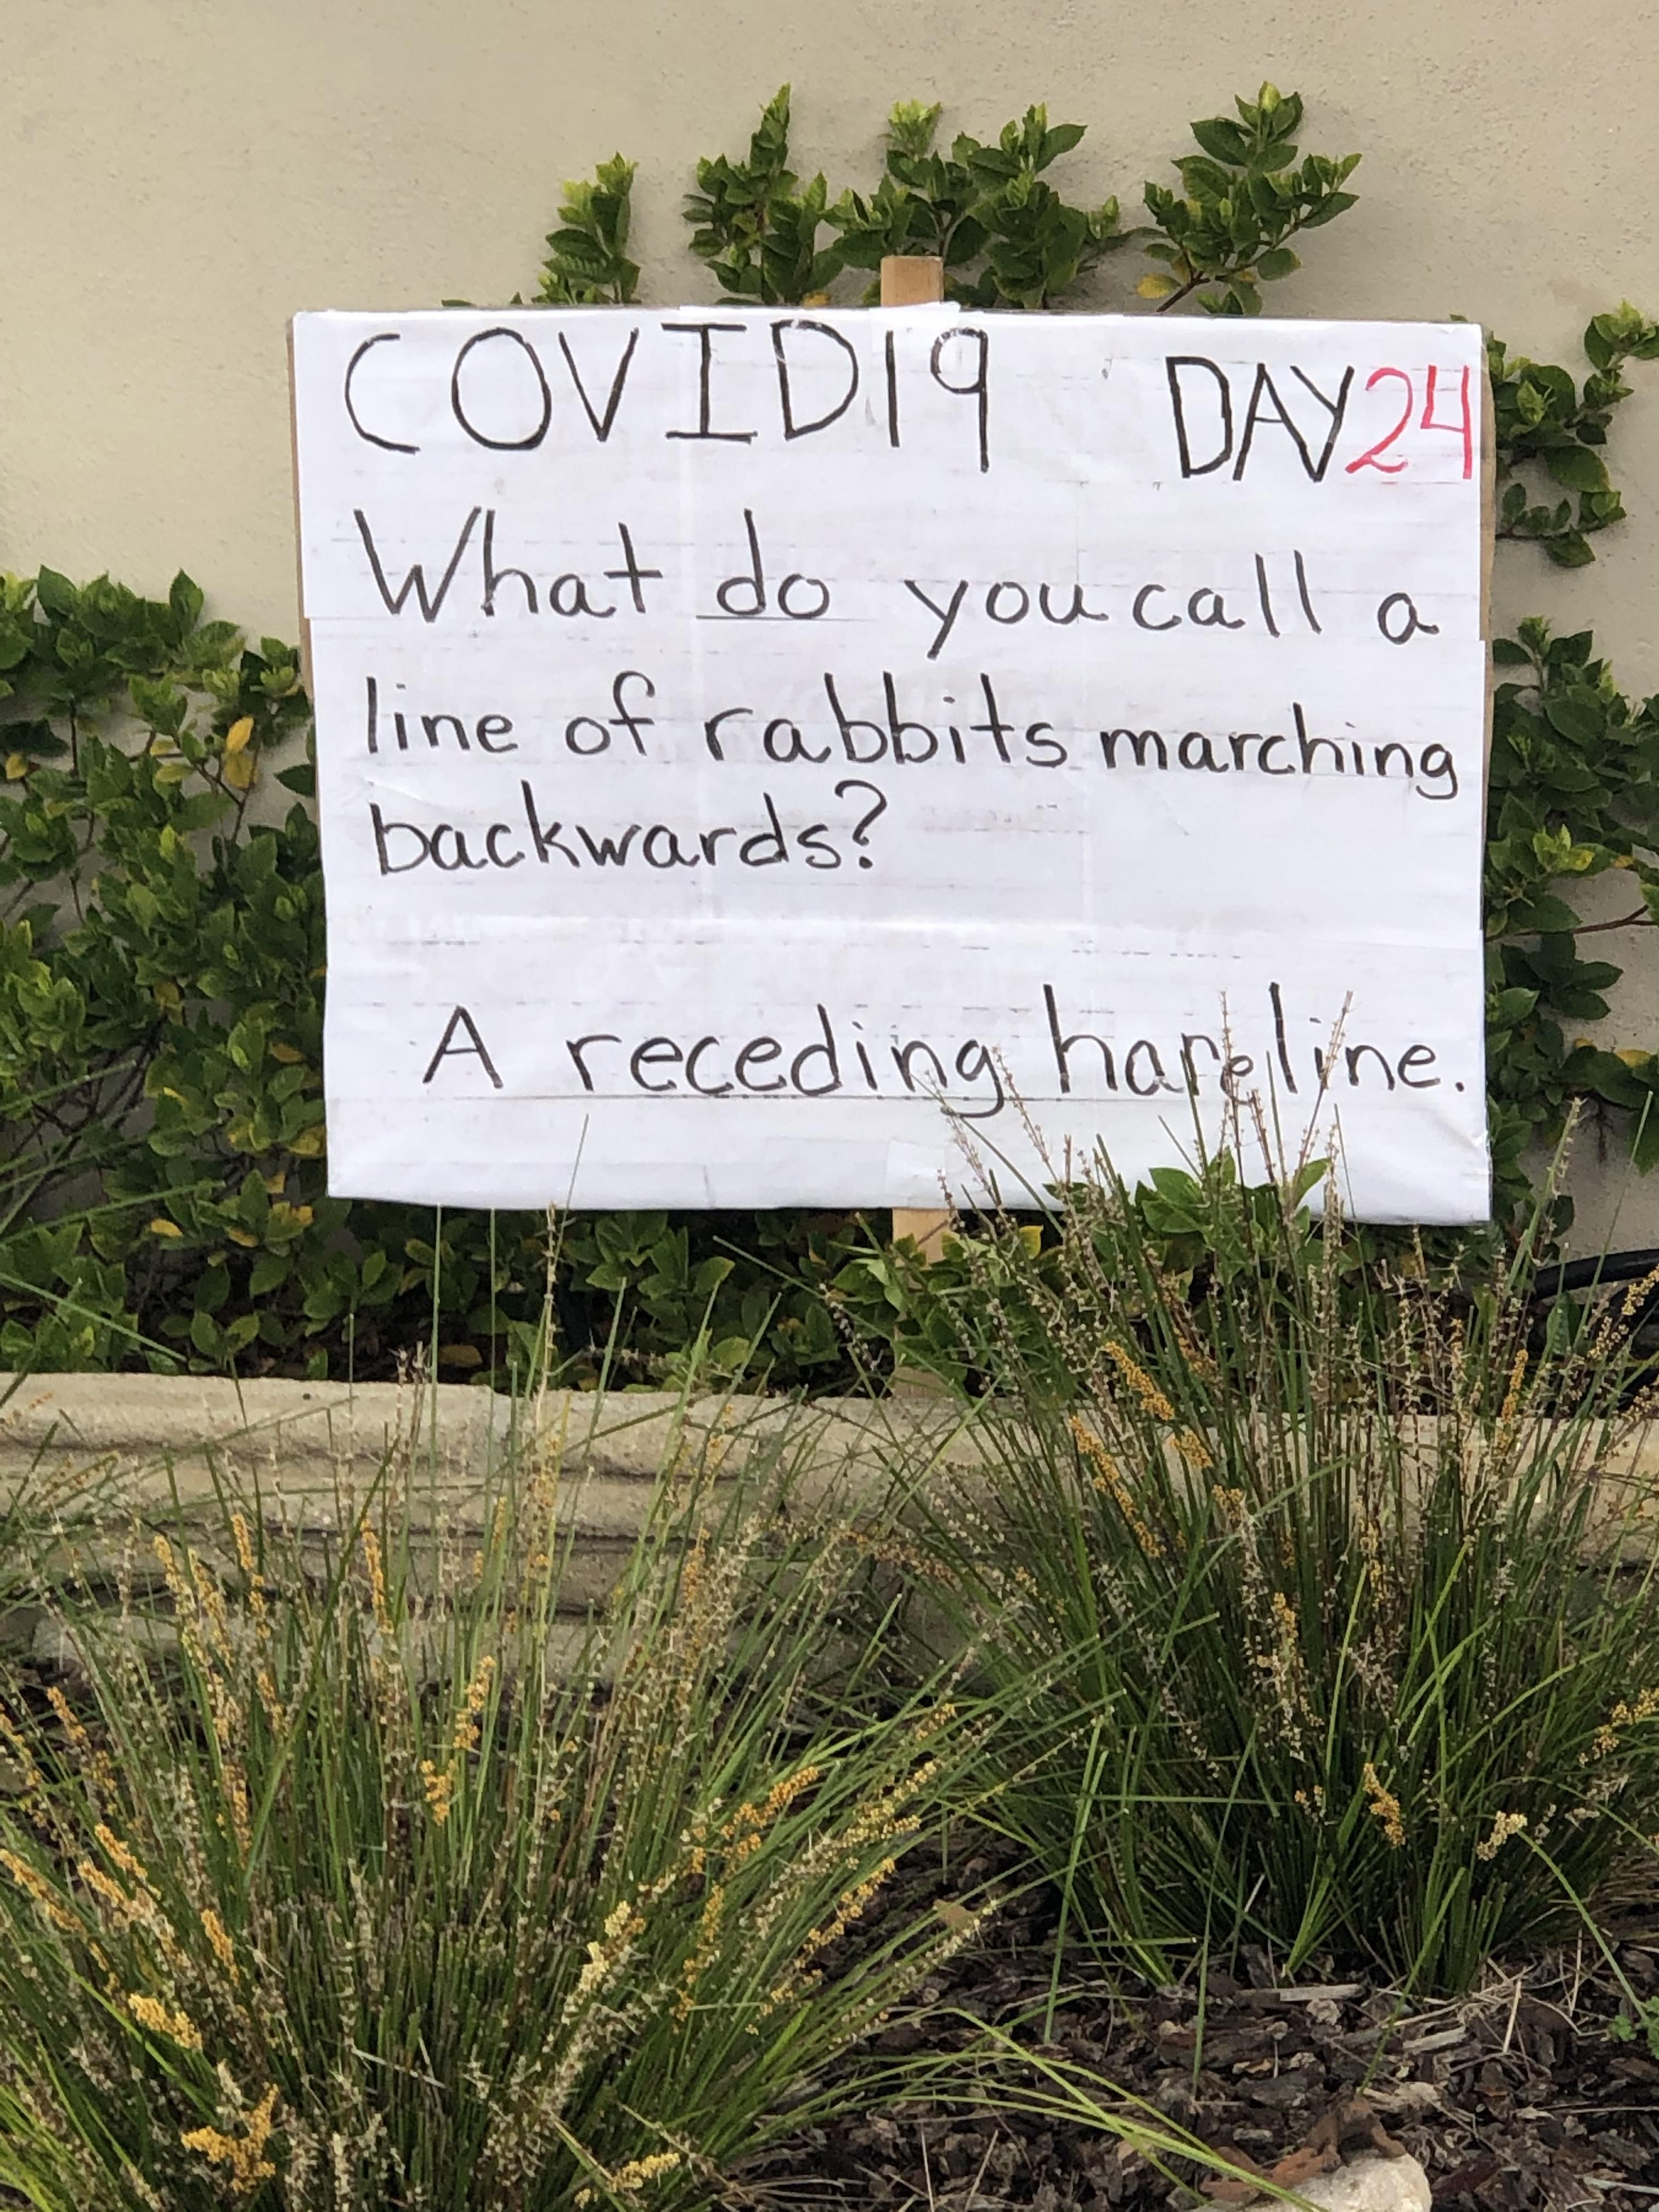 My neighbors front lawn dad joke #24